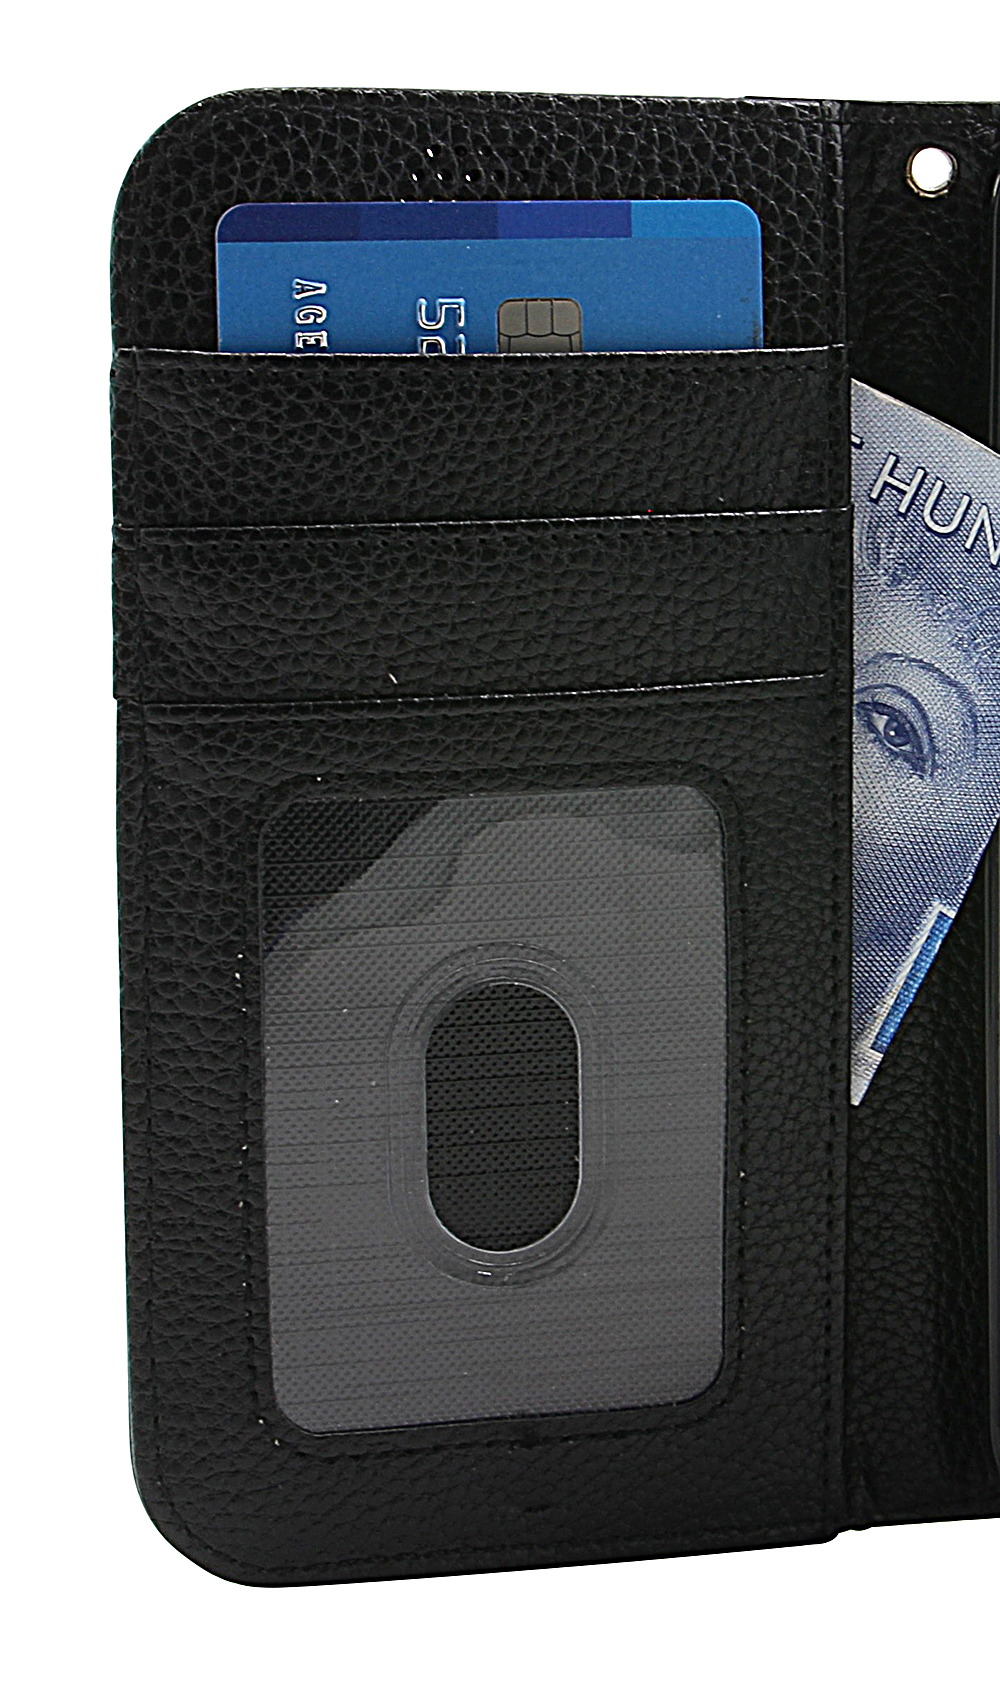 billigamobilskydd.seNew Standcase Wallet LG V30 (H930)